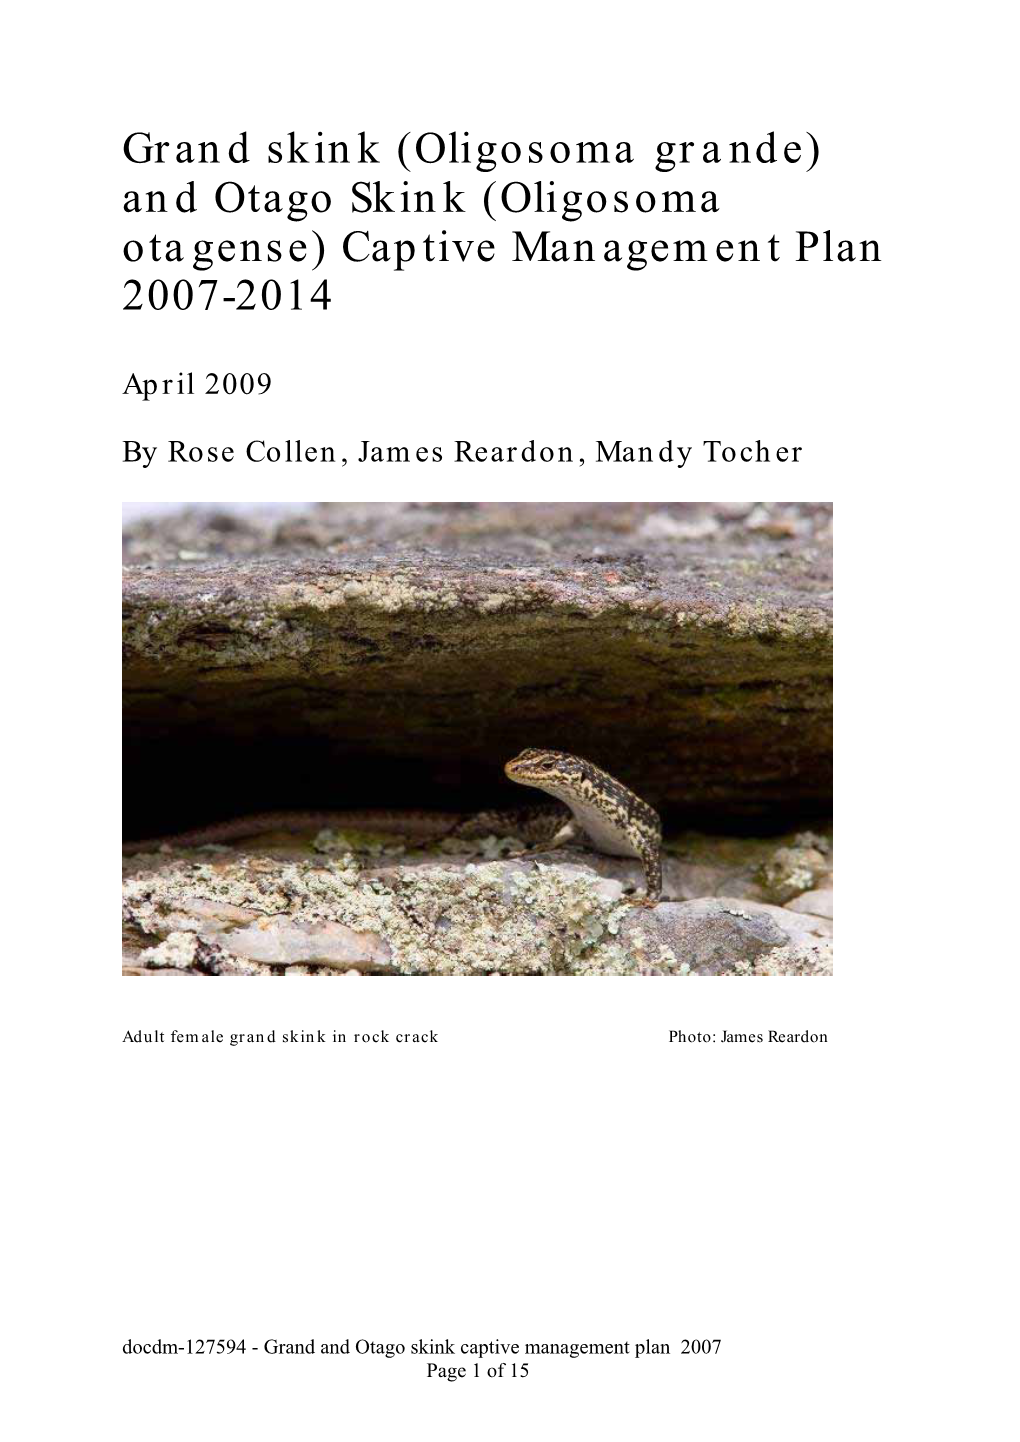 Grand and Otago Skink Captive Management Plan 2007-2014